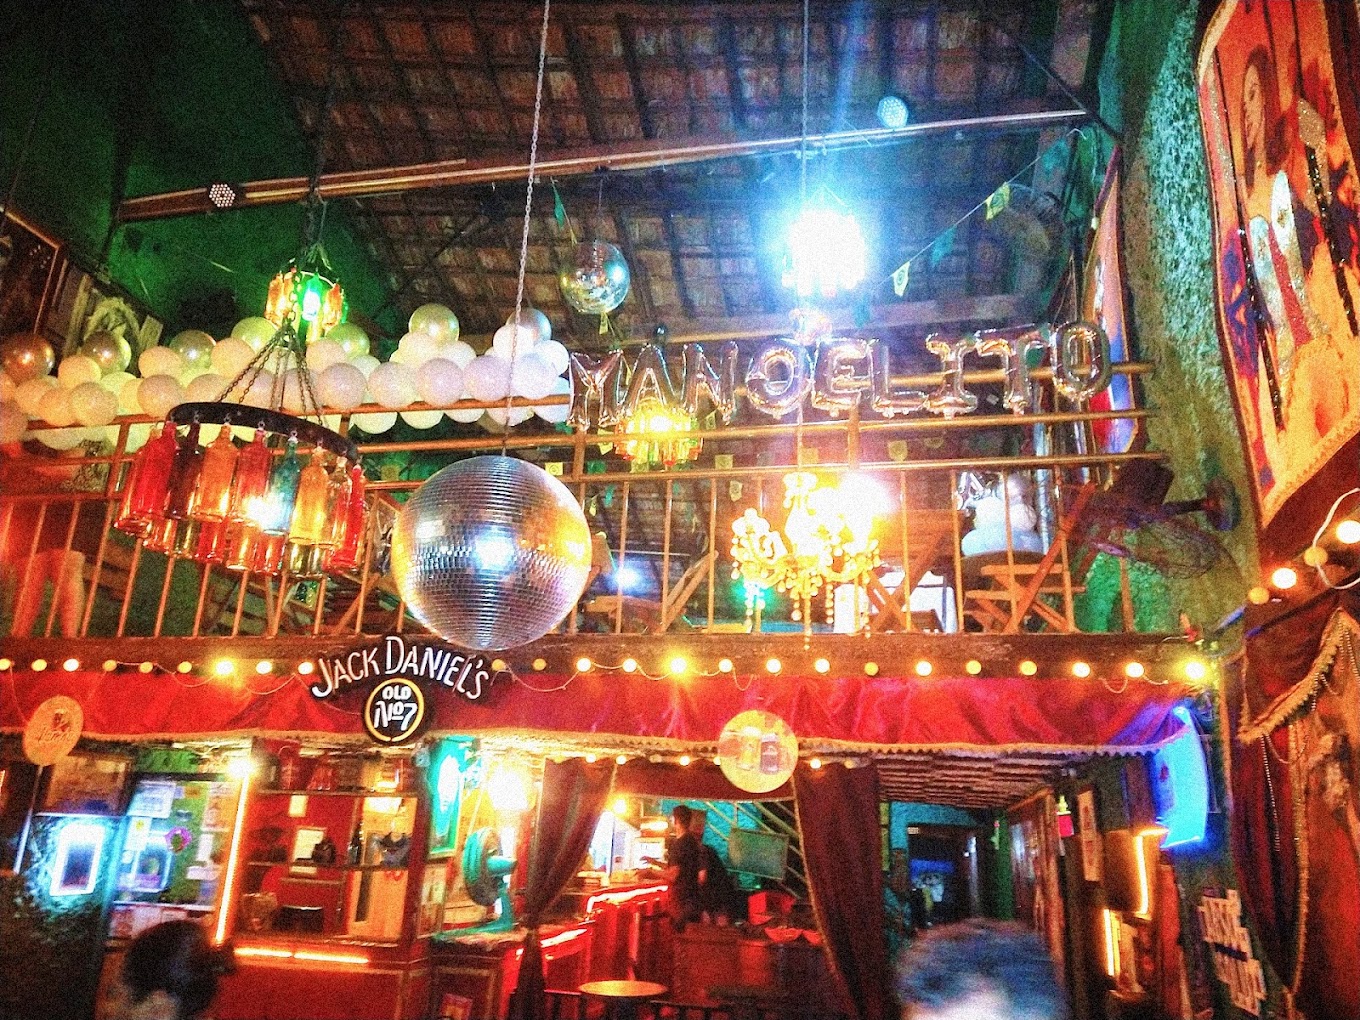 Bar gay Bar do Céu Recife